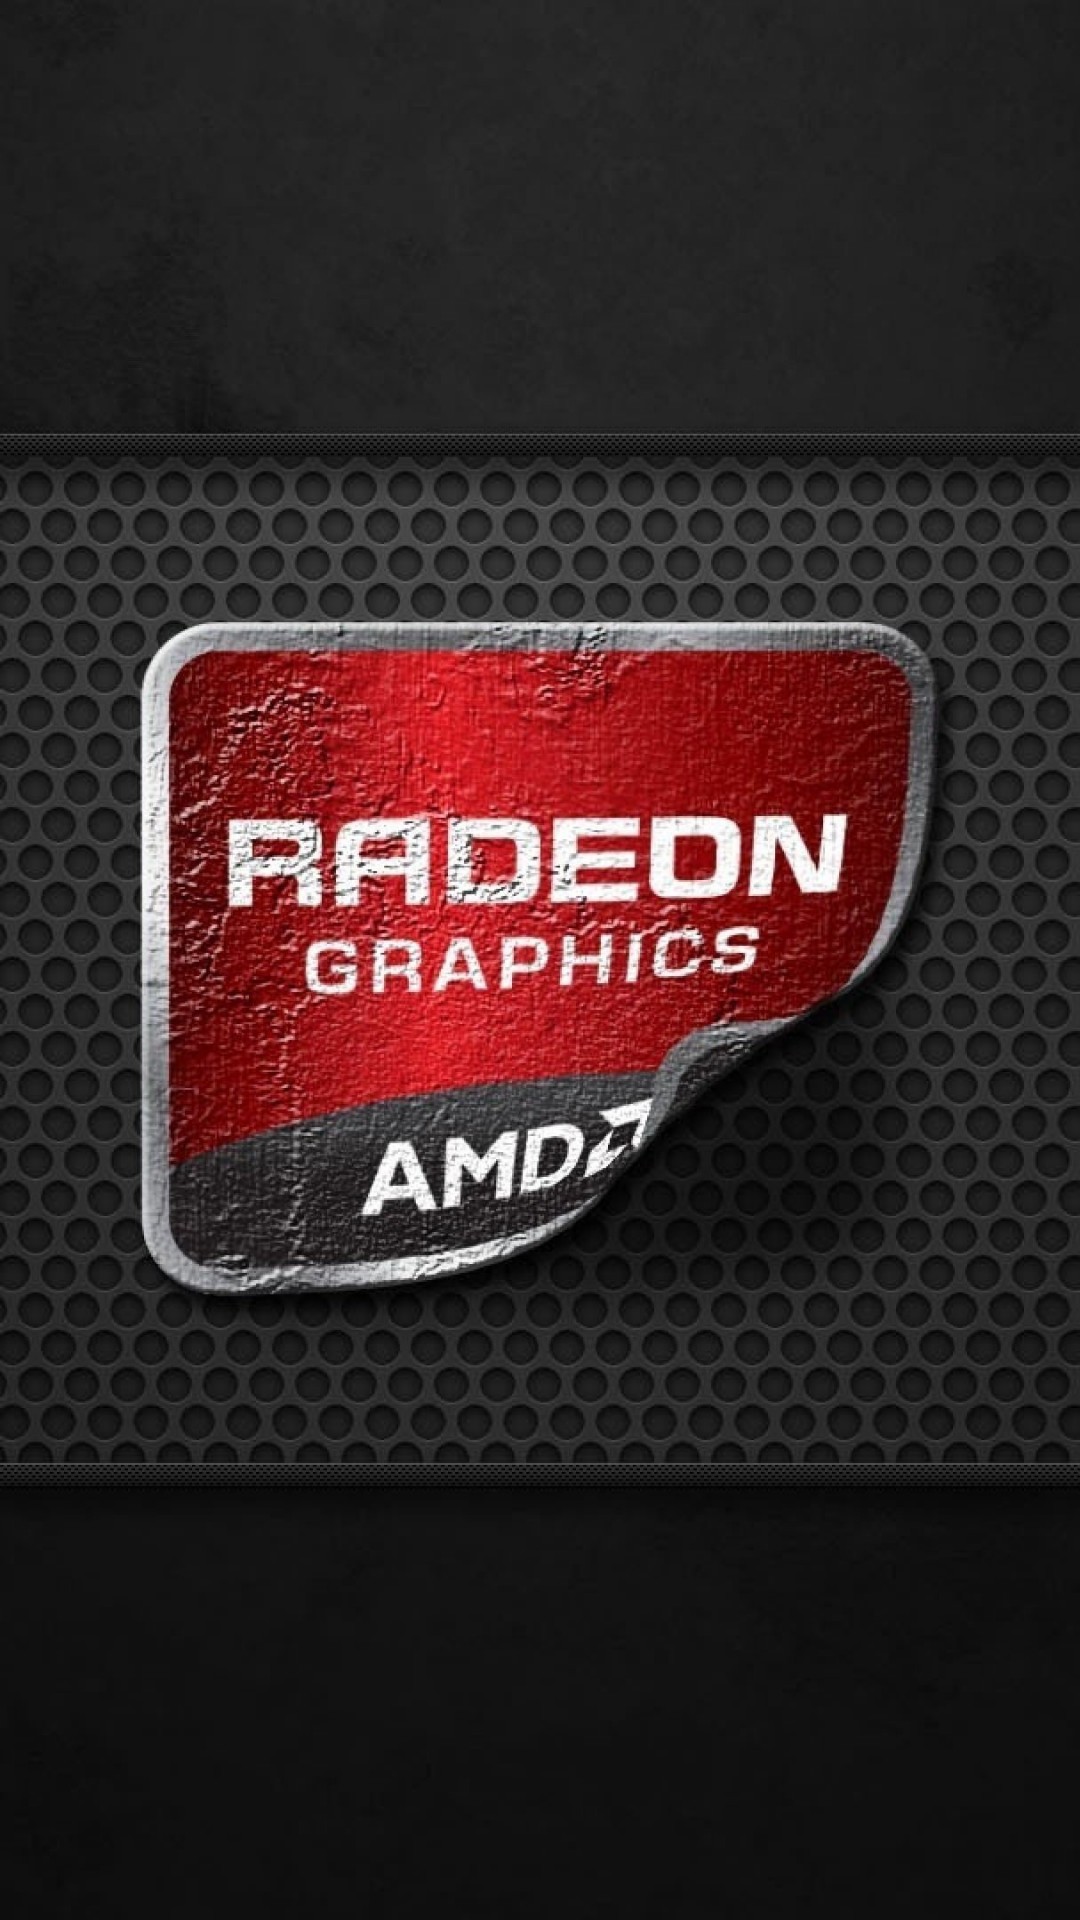 AMD Radeon Graphics Wallpaper for SONY Xperia Z1